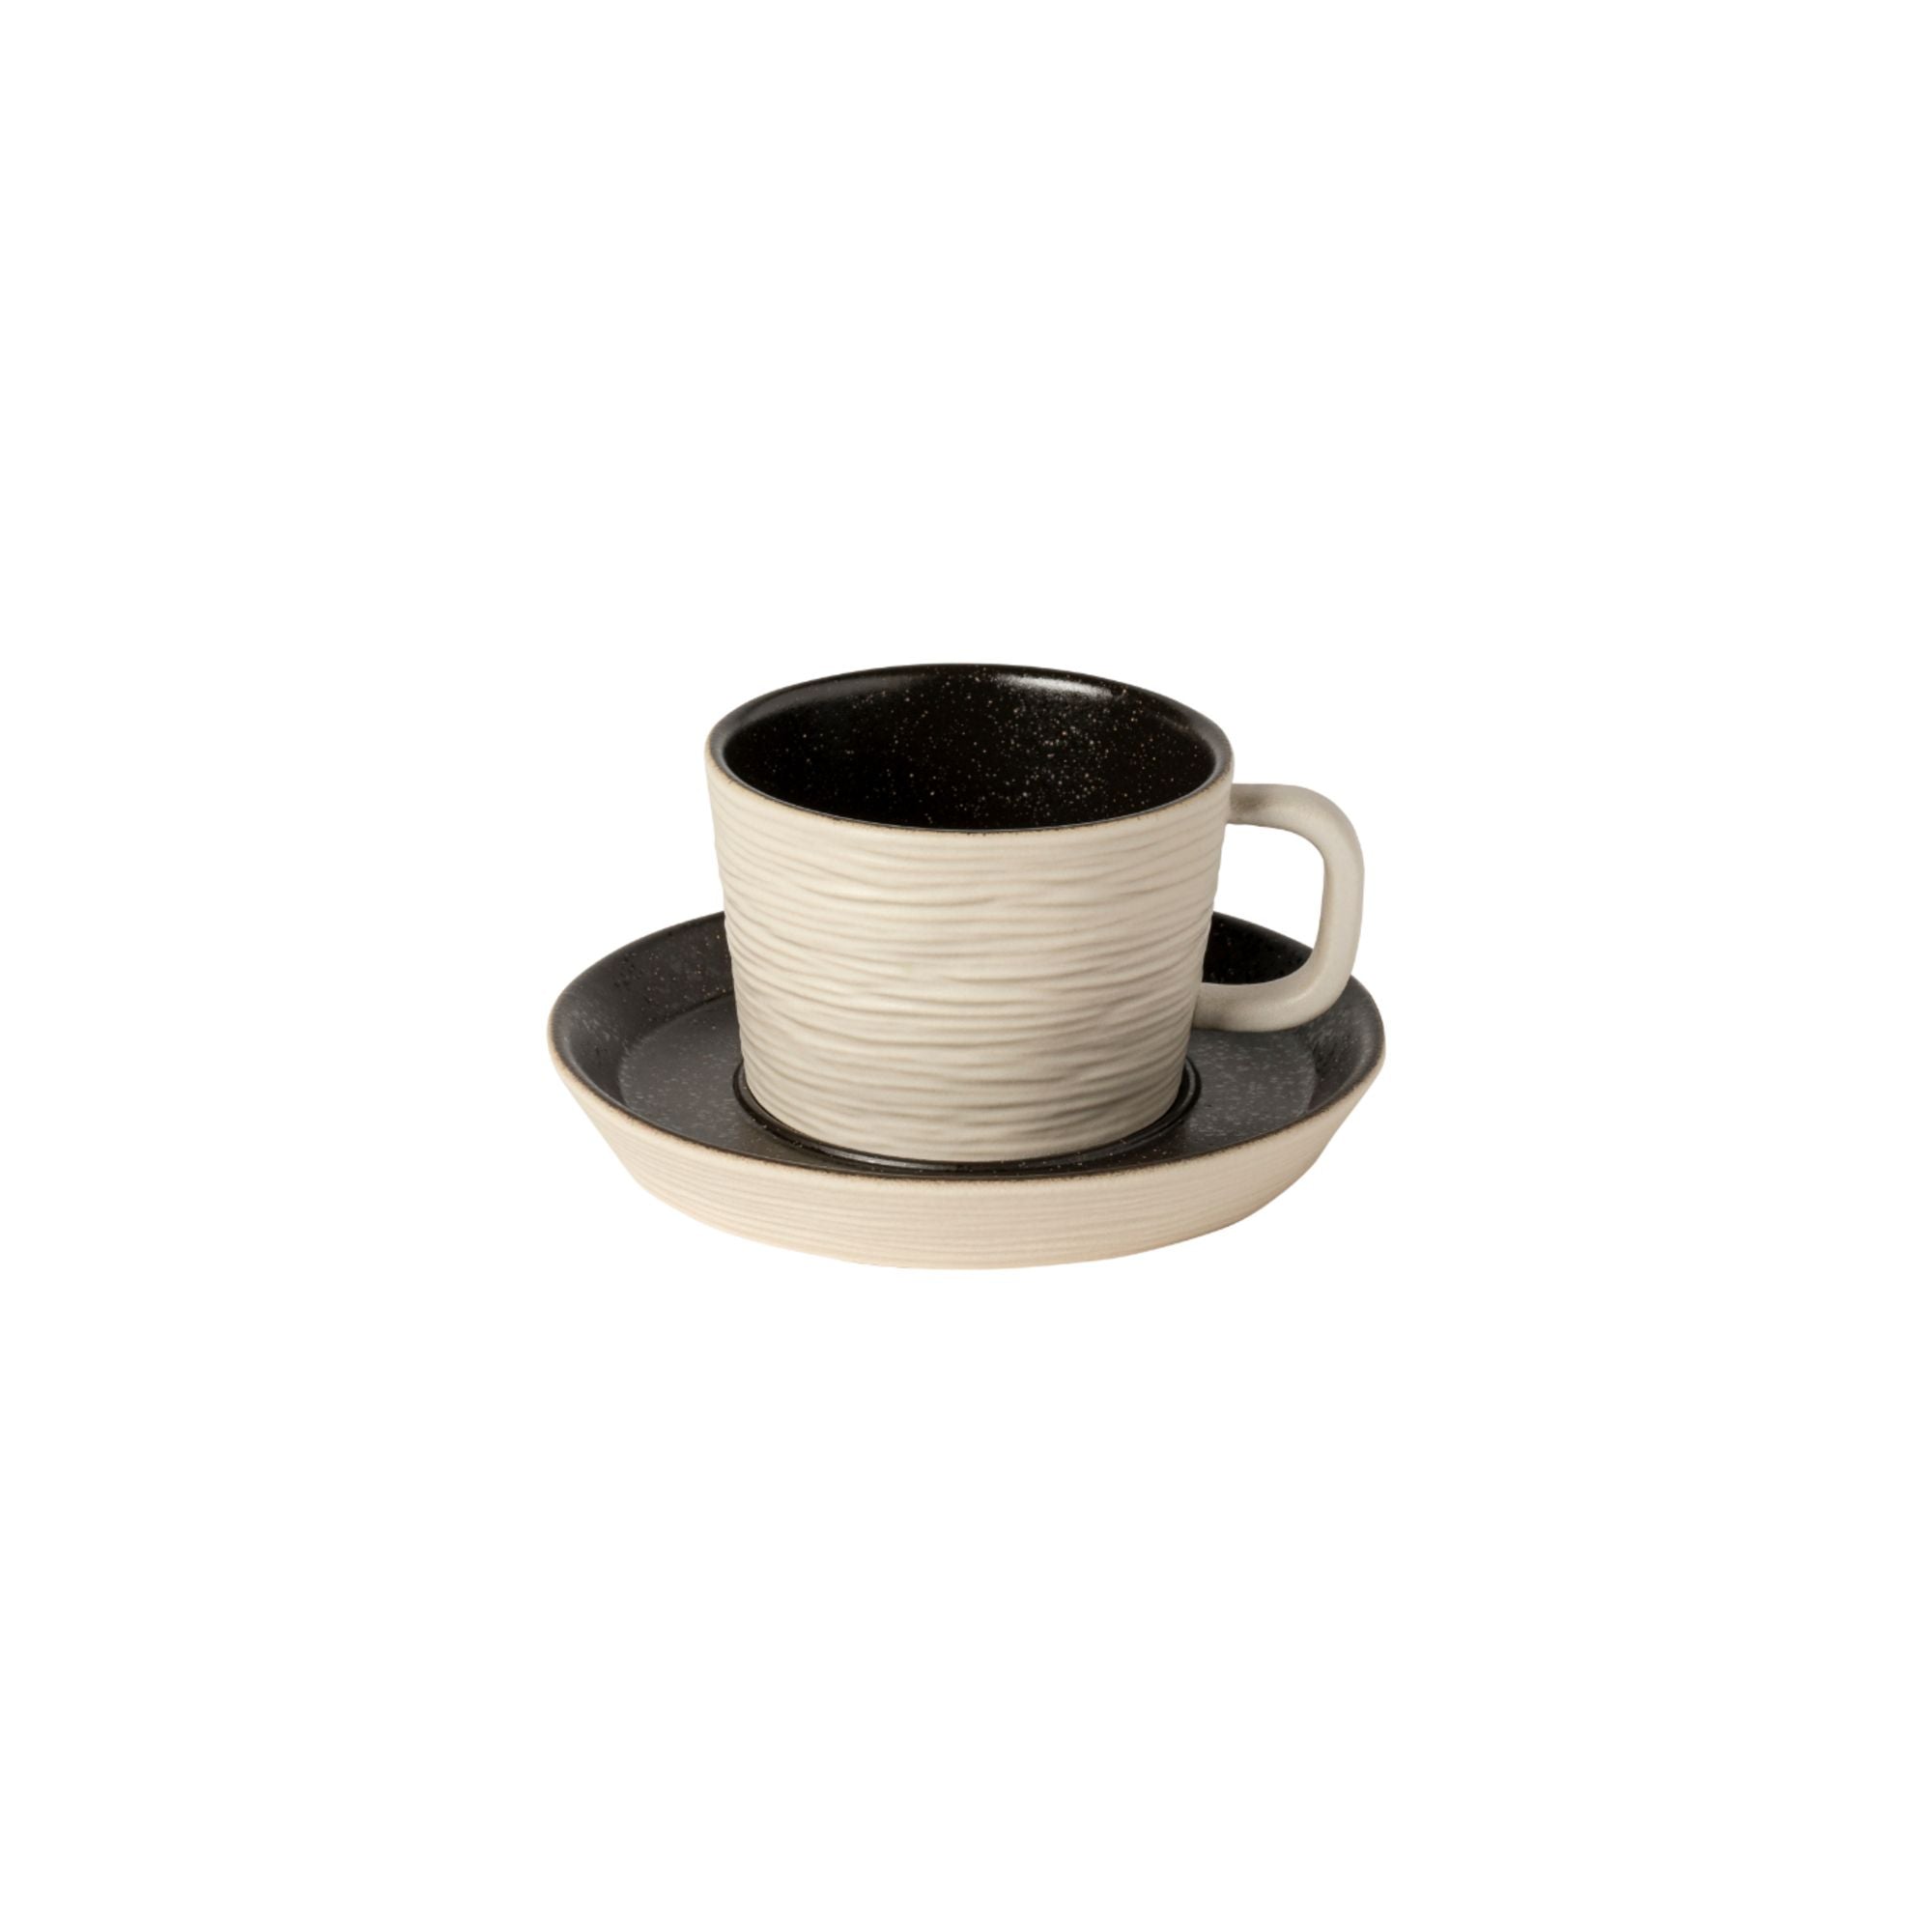 Nótos Tea Cup and Saucer 7 oz. Latitude Black